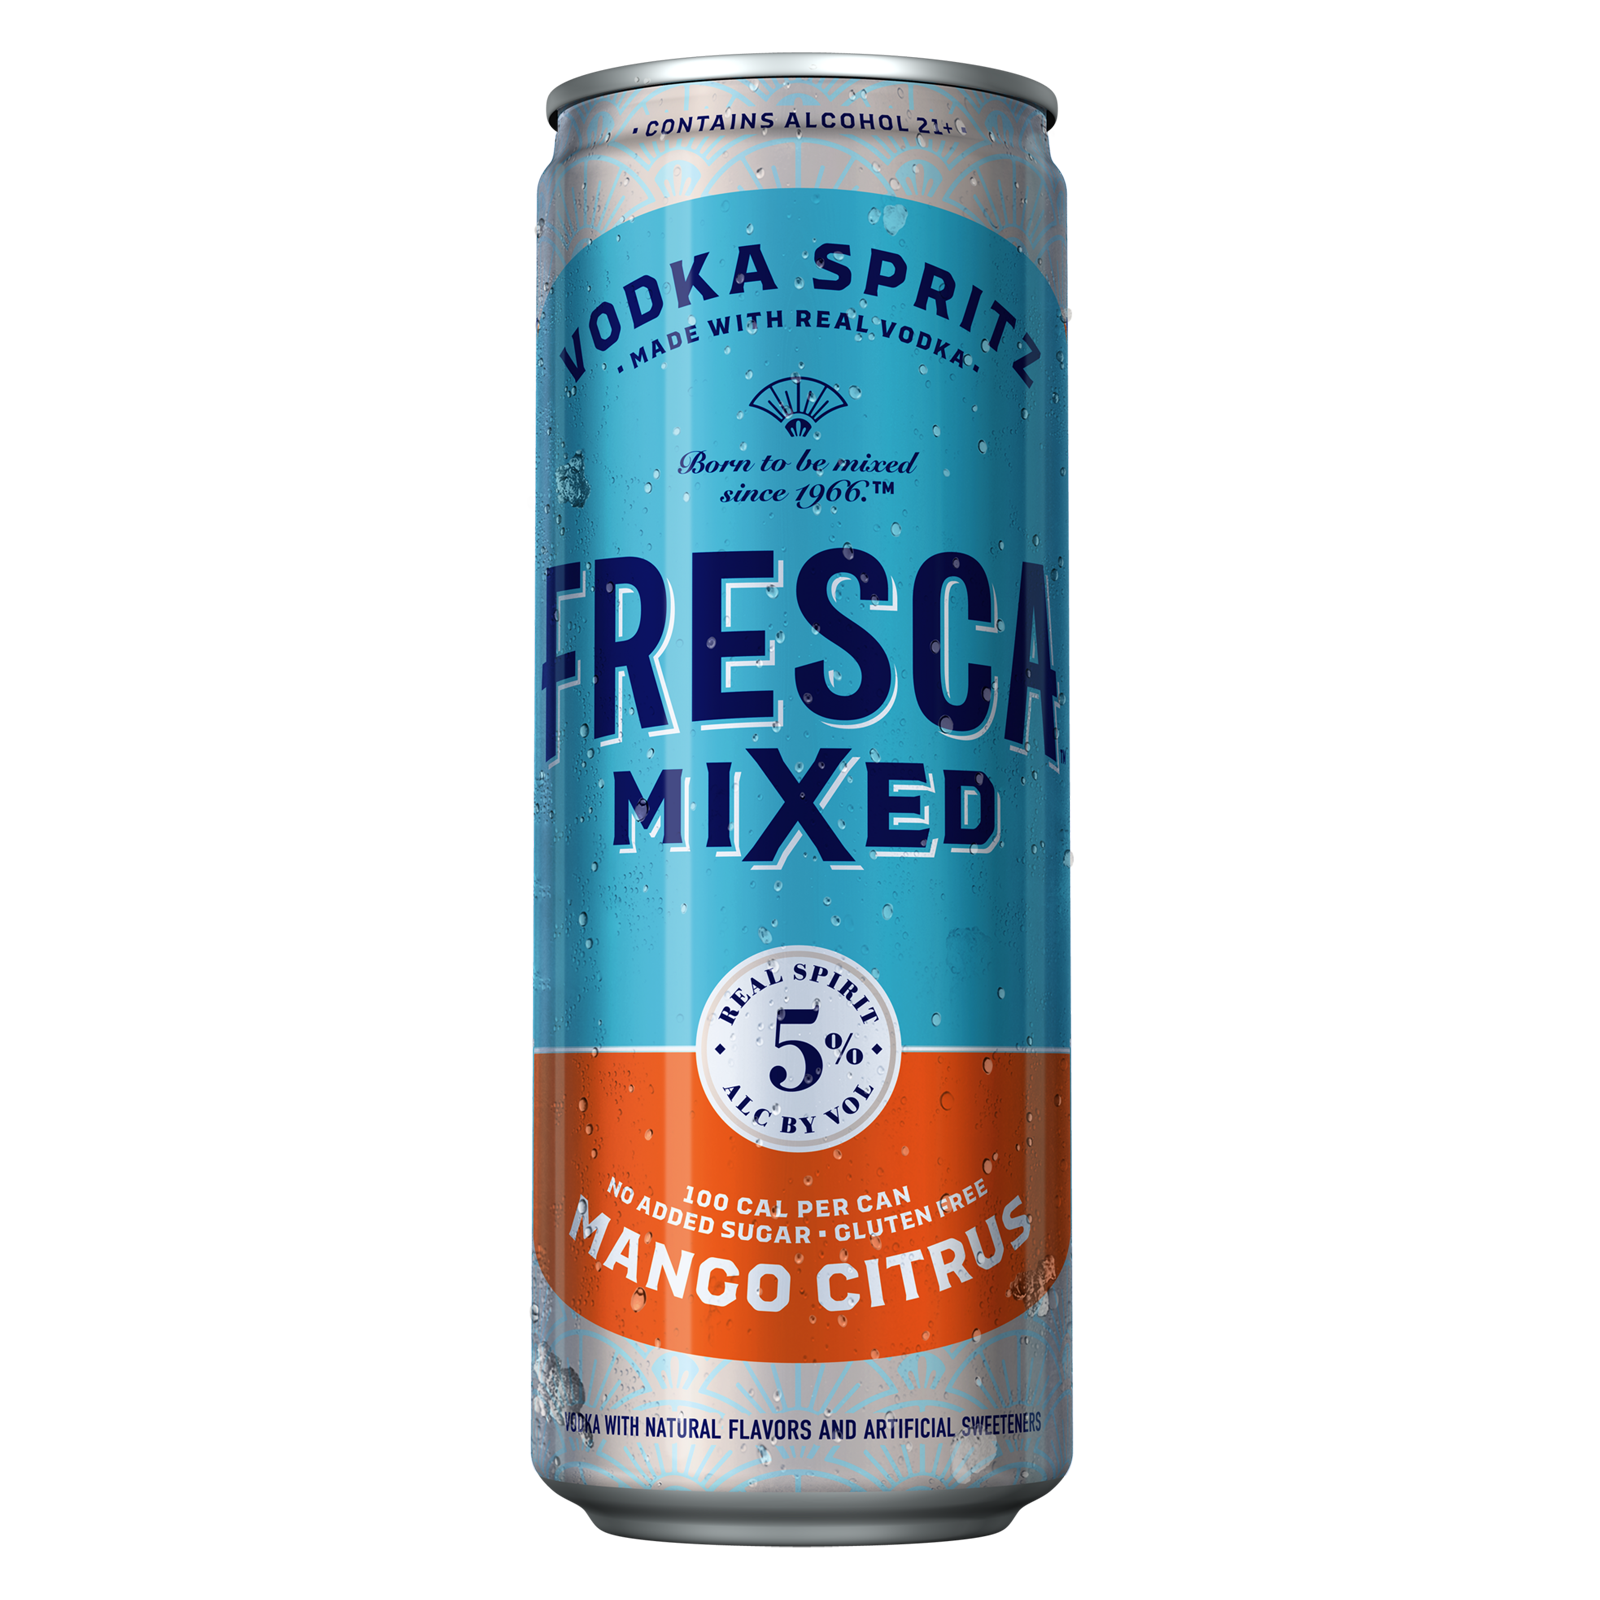 Fresca Mixed Vodka Spritz Mango Citrus Single 12oz Can 5% ABV